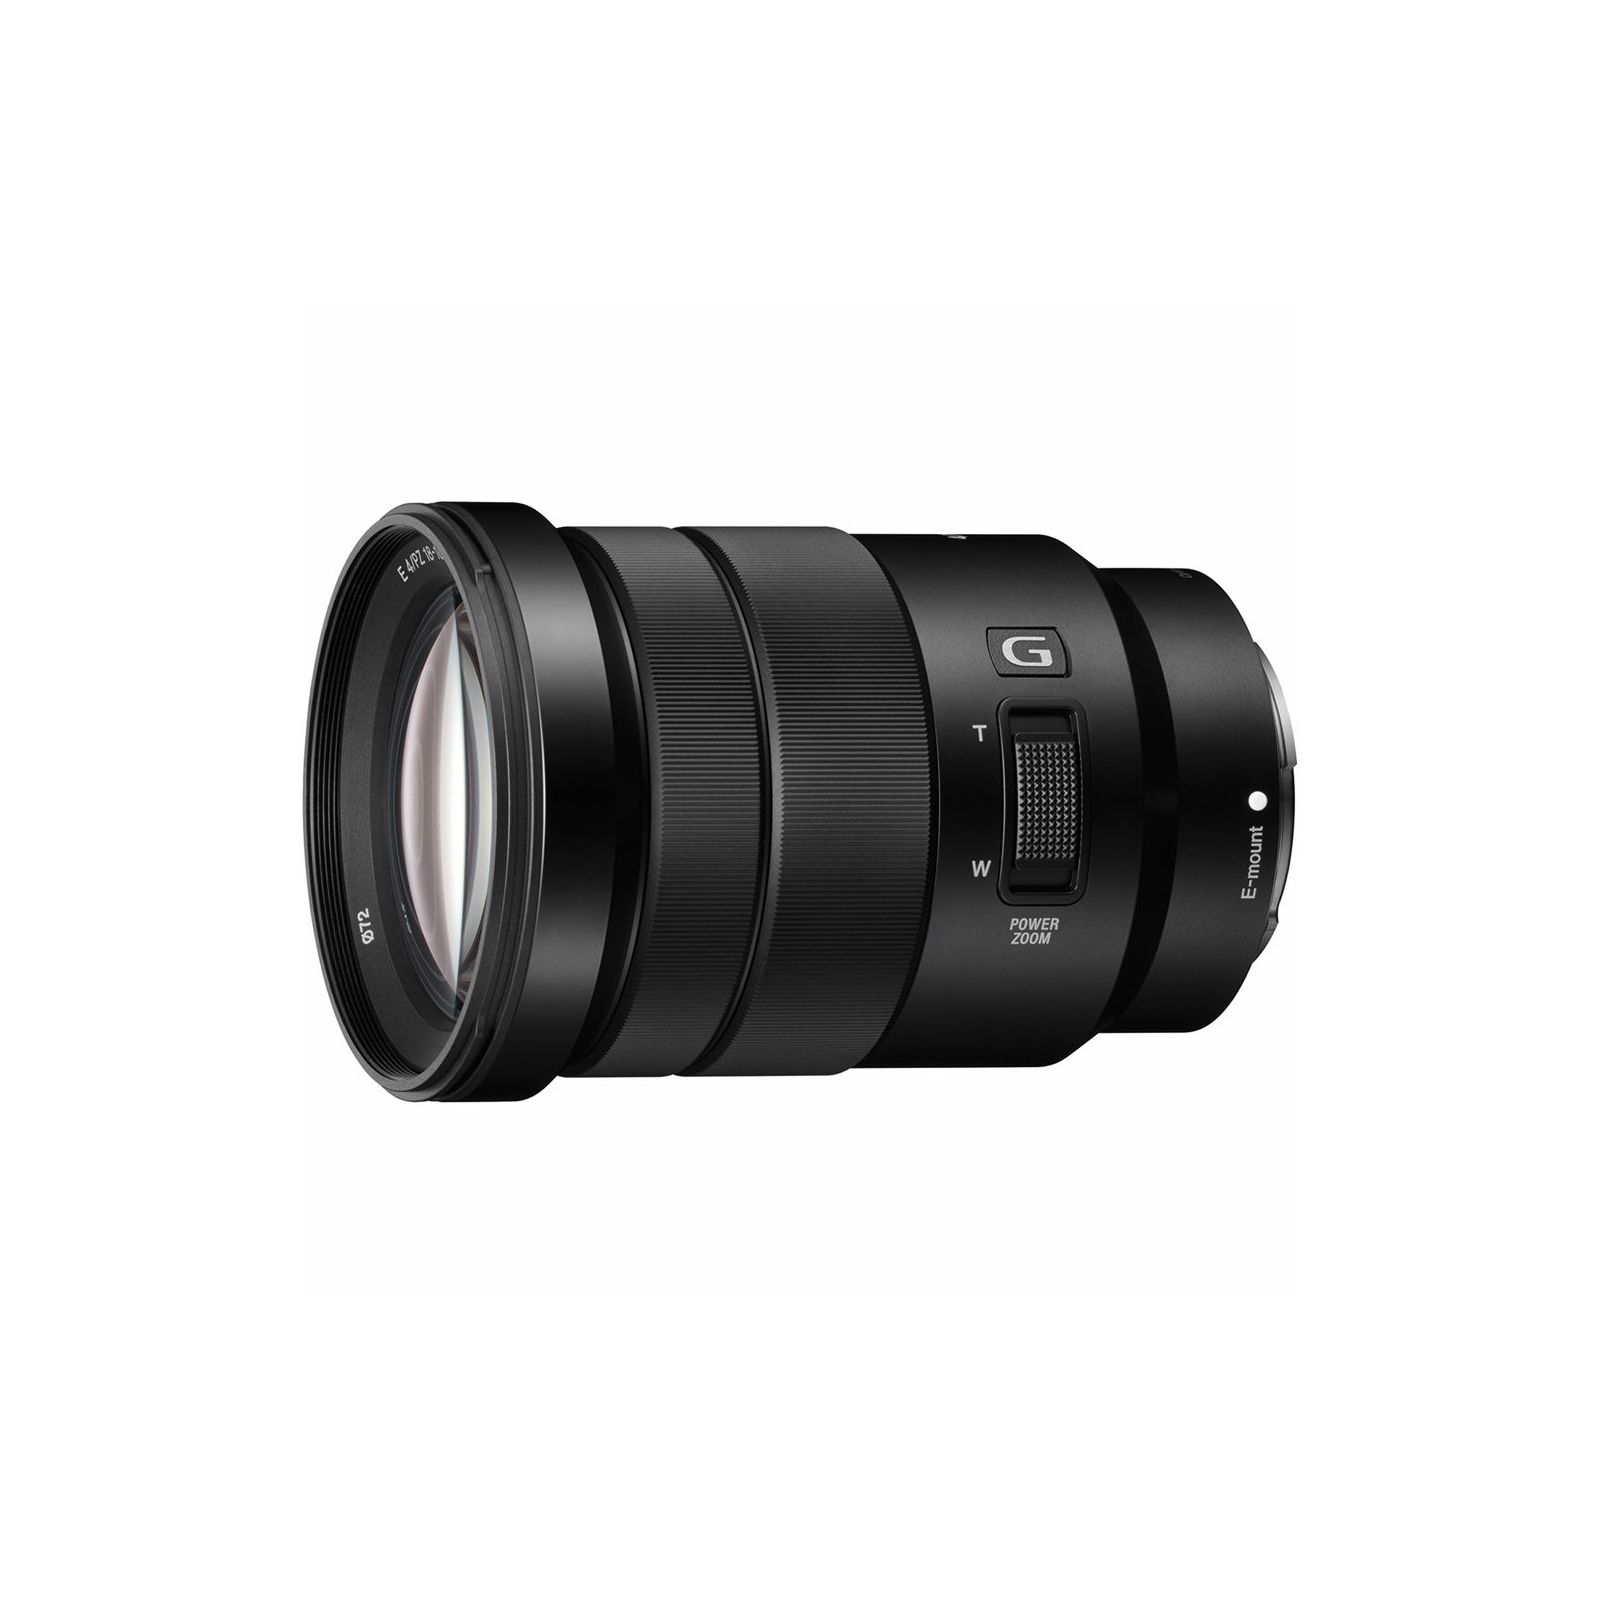 Sony PXW-FS5 XDCAM Super 35 Camera System with Zoom Lens 18-105mm objektiv